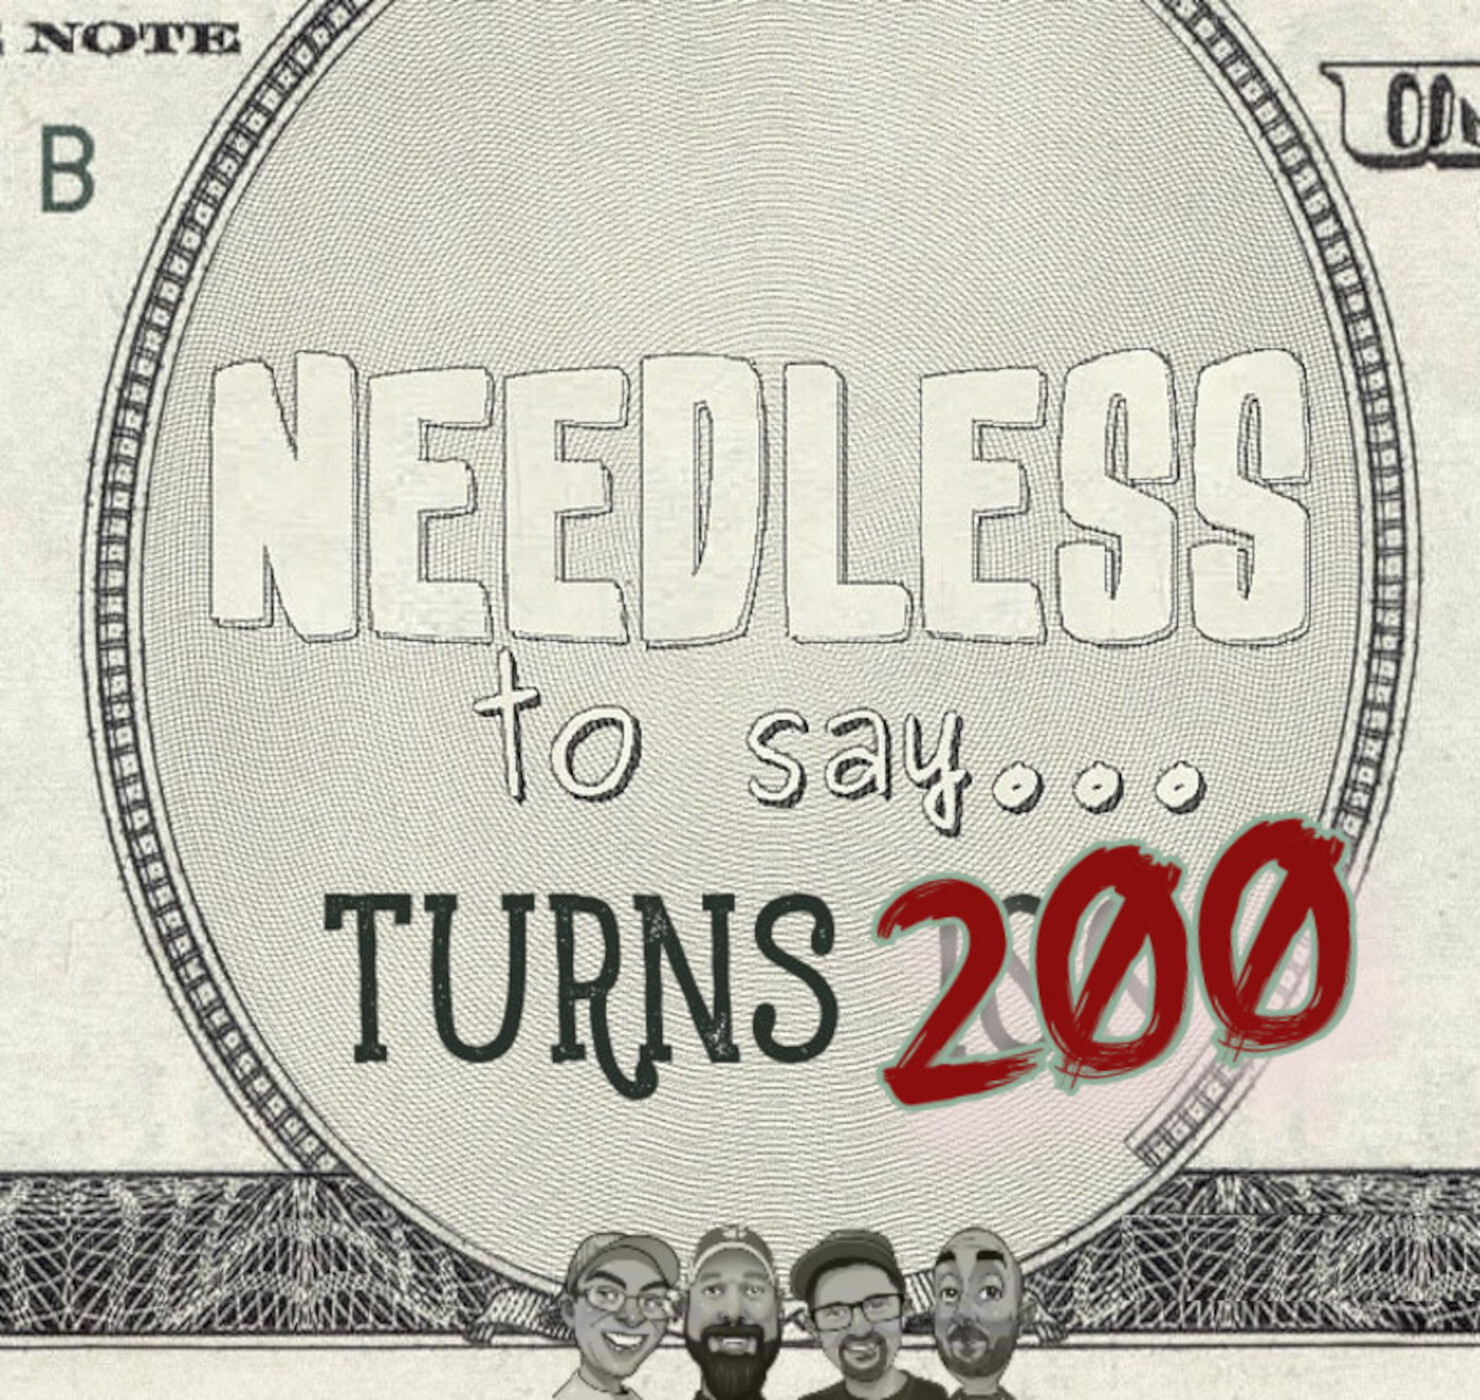 NTS Turns 200! Image